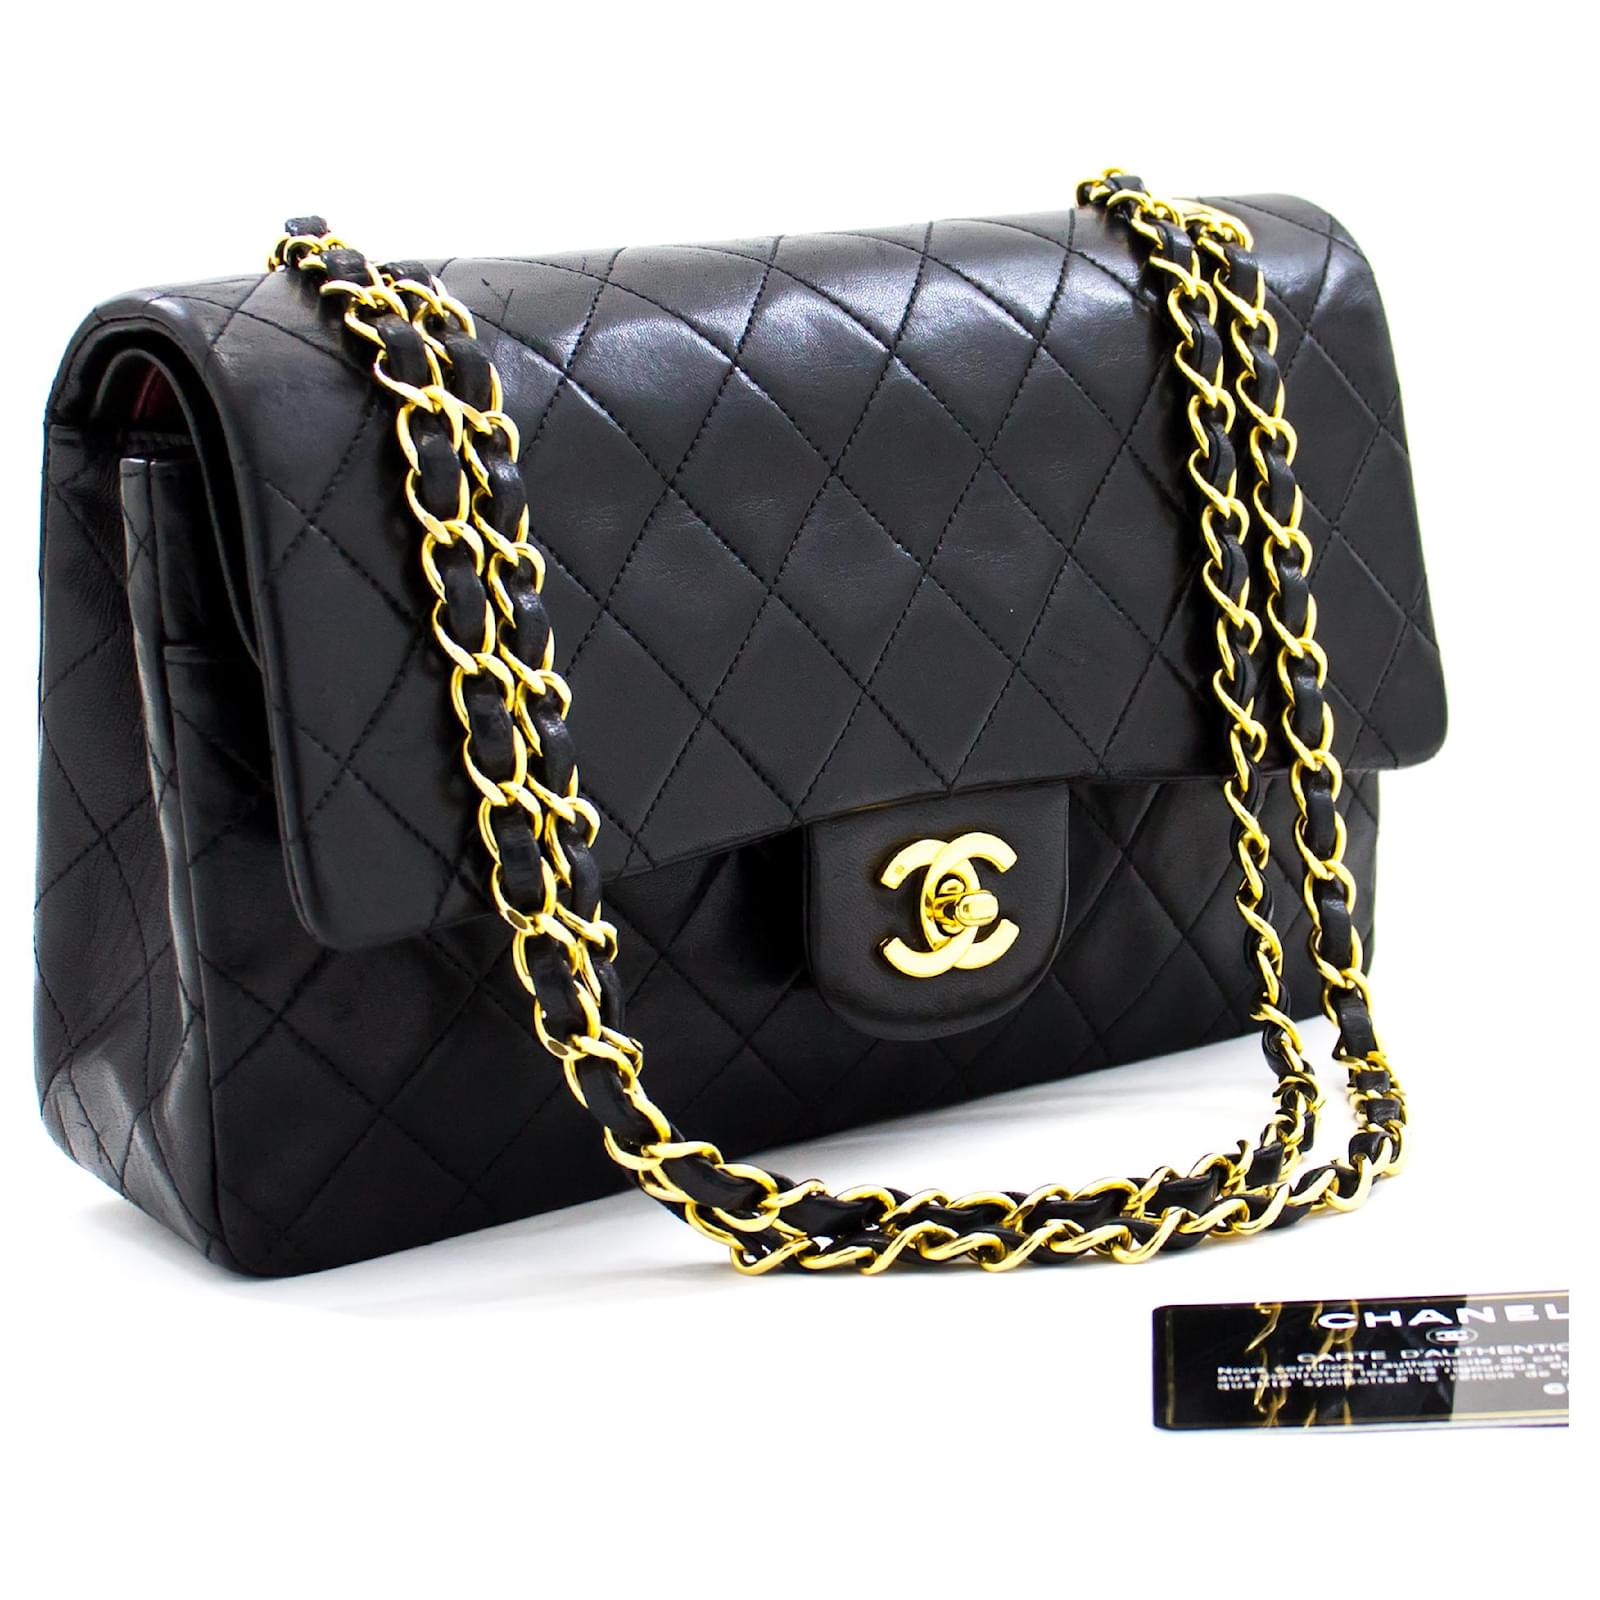 Handbags Chanel Chanel 2.55 Lined Flap Medium Chain Shoulder Bag Black Lambskin